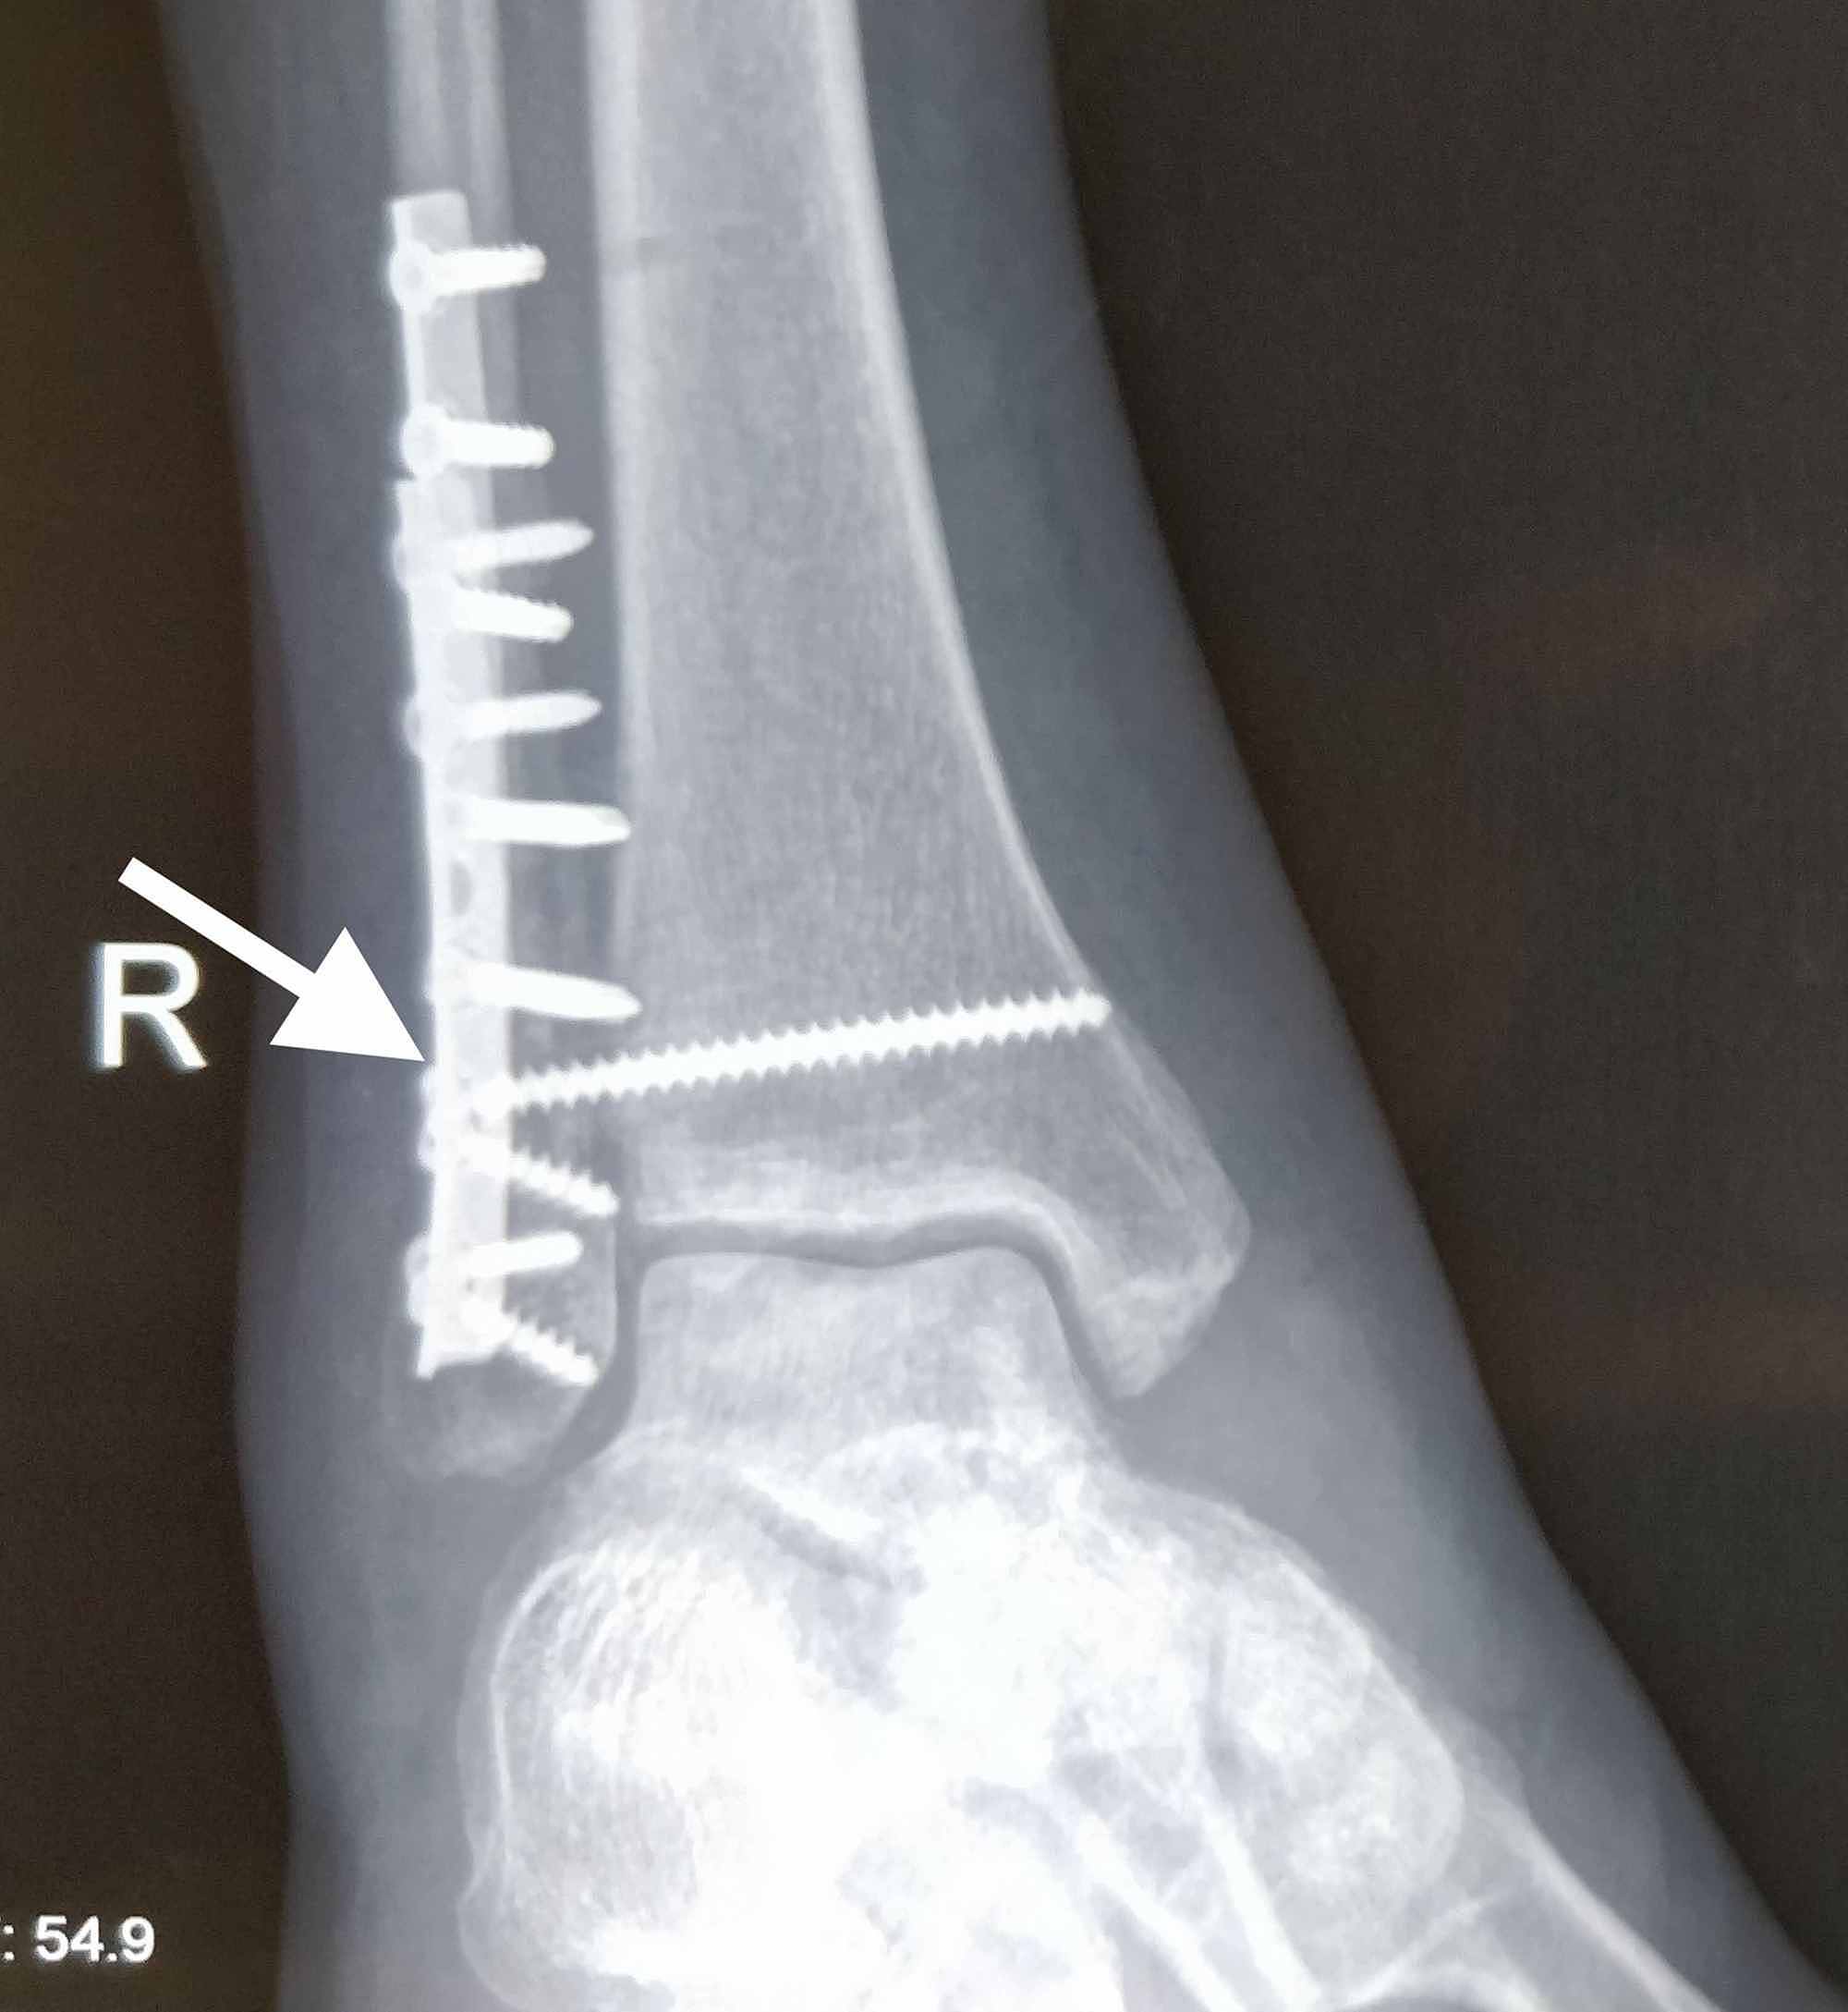 proximal and distal fibula fracture